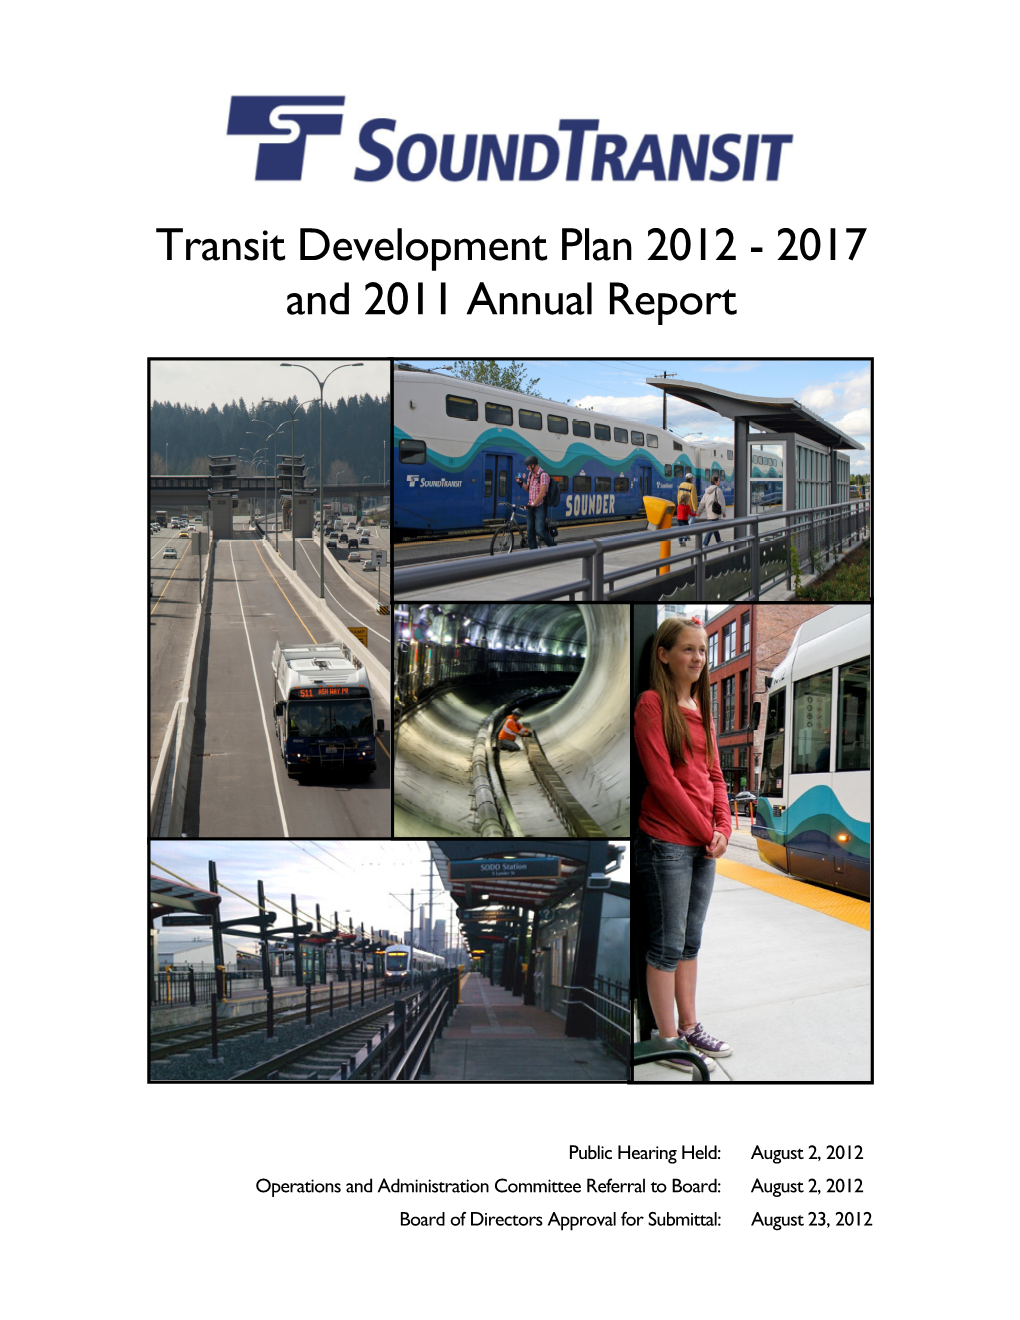 Transit Development Plan 2012 - 2017 and 2011 Annual Report